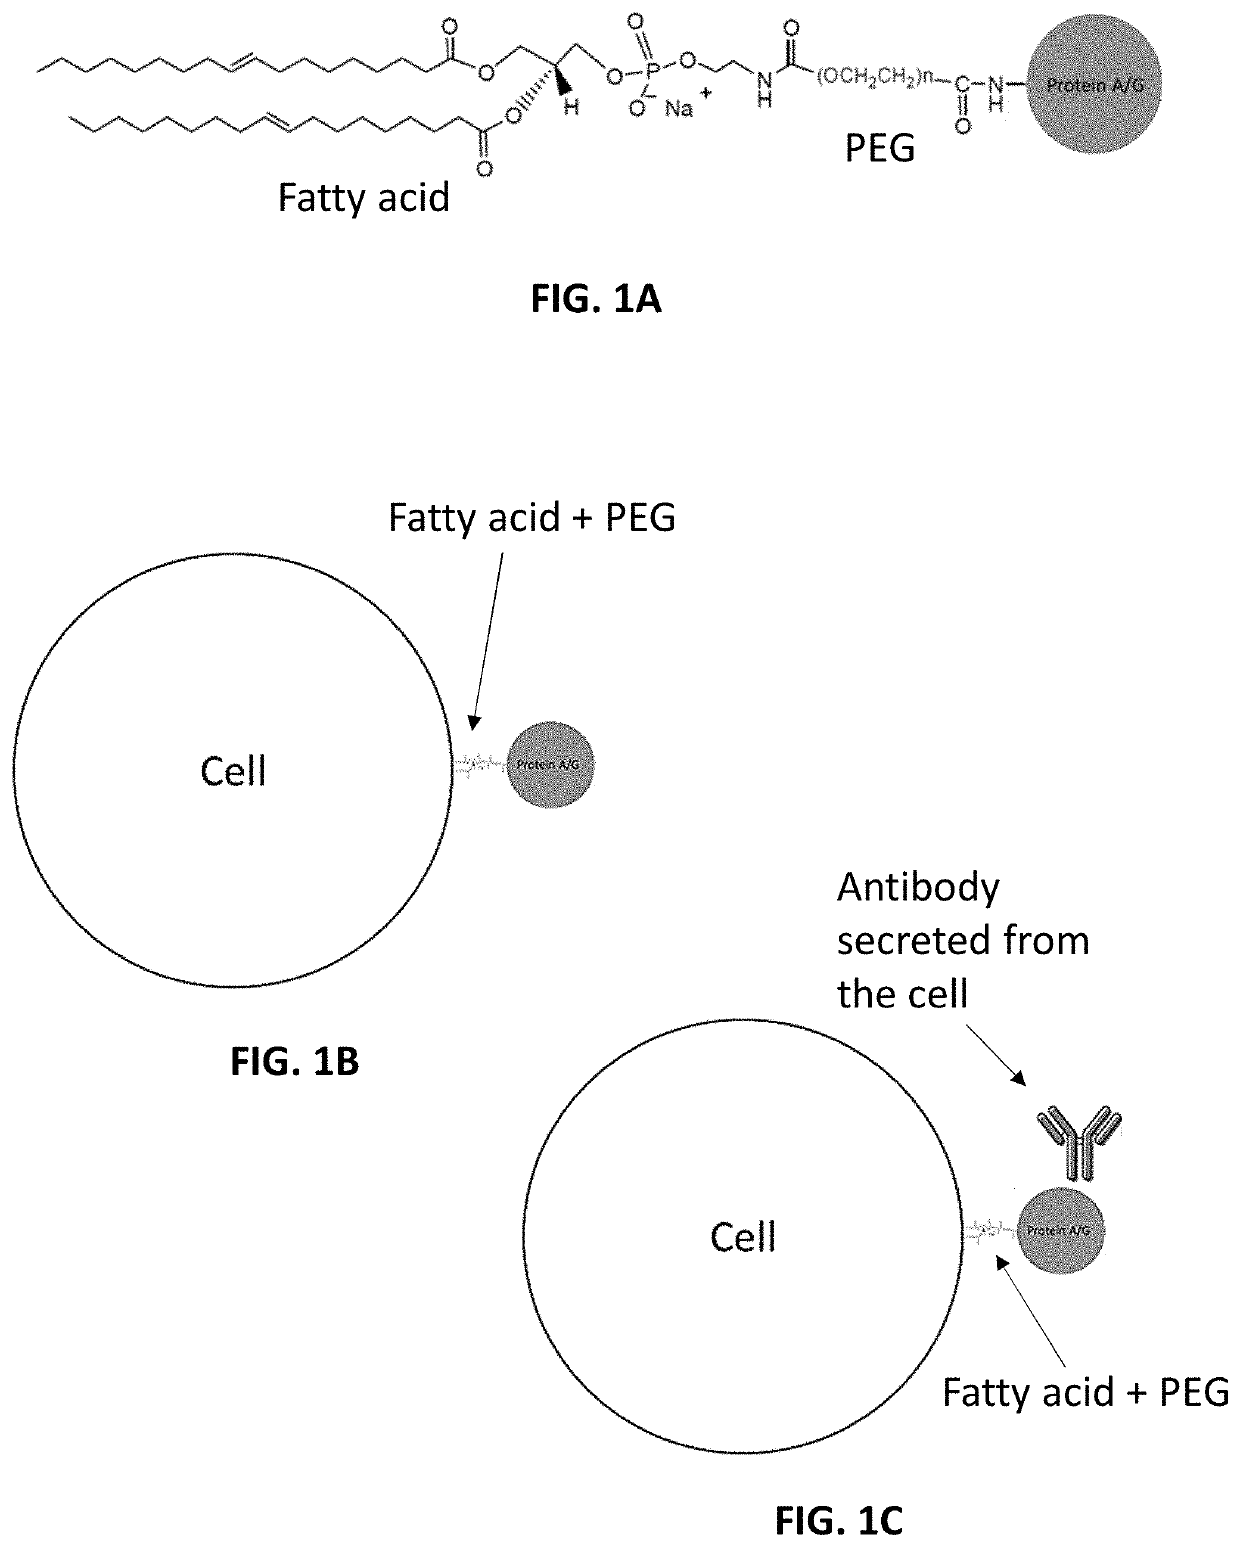 Kits and method of modifying, detecting, and sorting antibody-producing cells